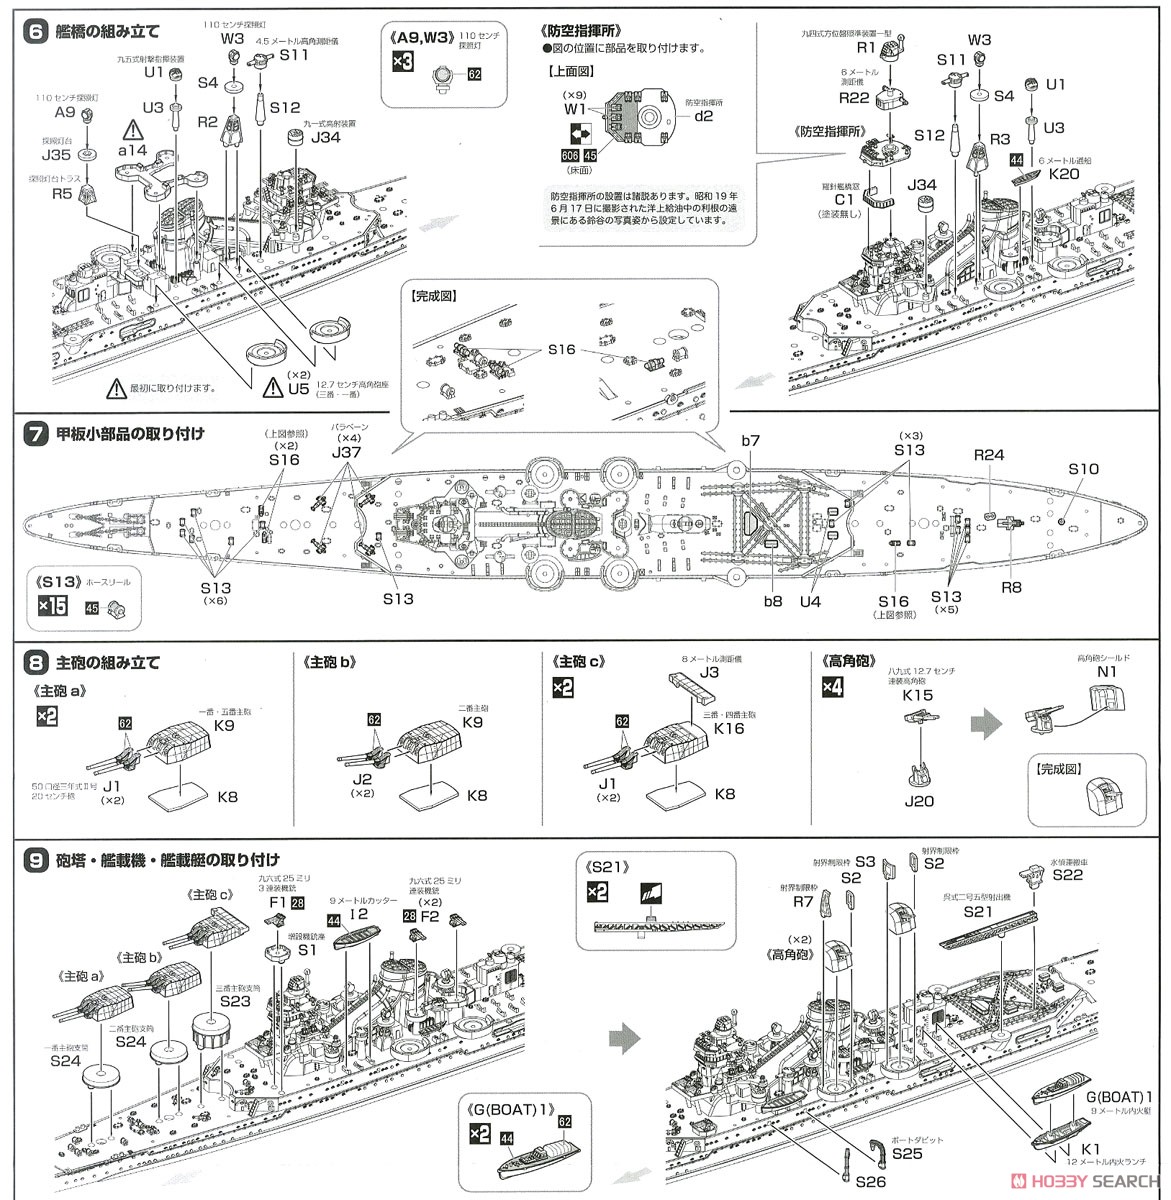 日本海軍重巡洋艦 鈴谷 (昭和19年/捷一号作戦) (プラモデル) 設計図3